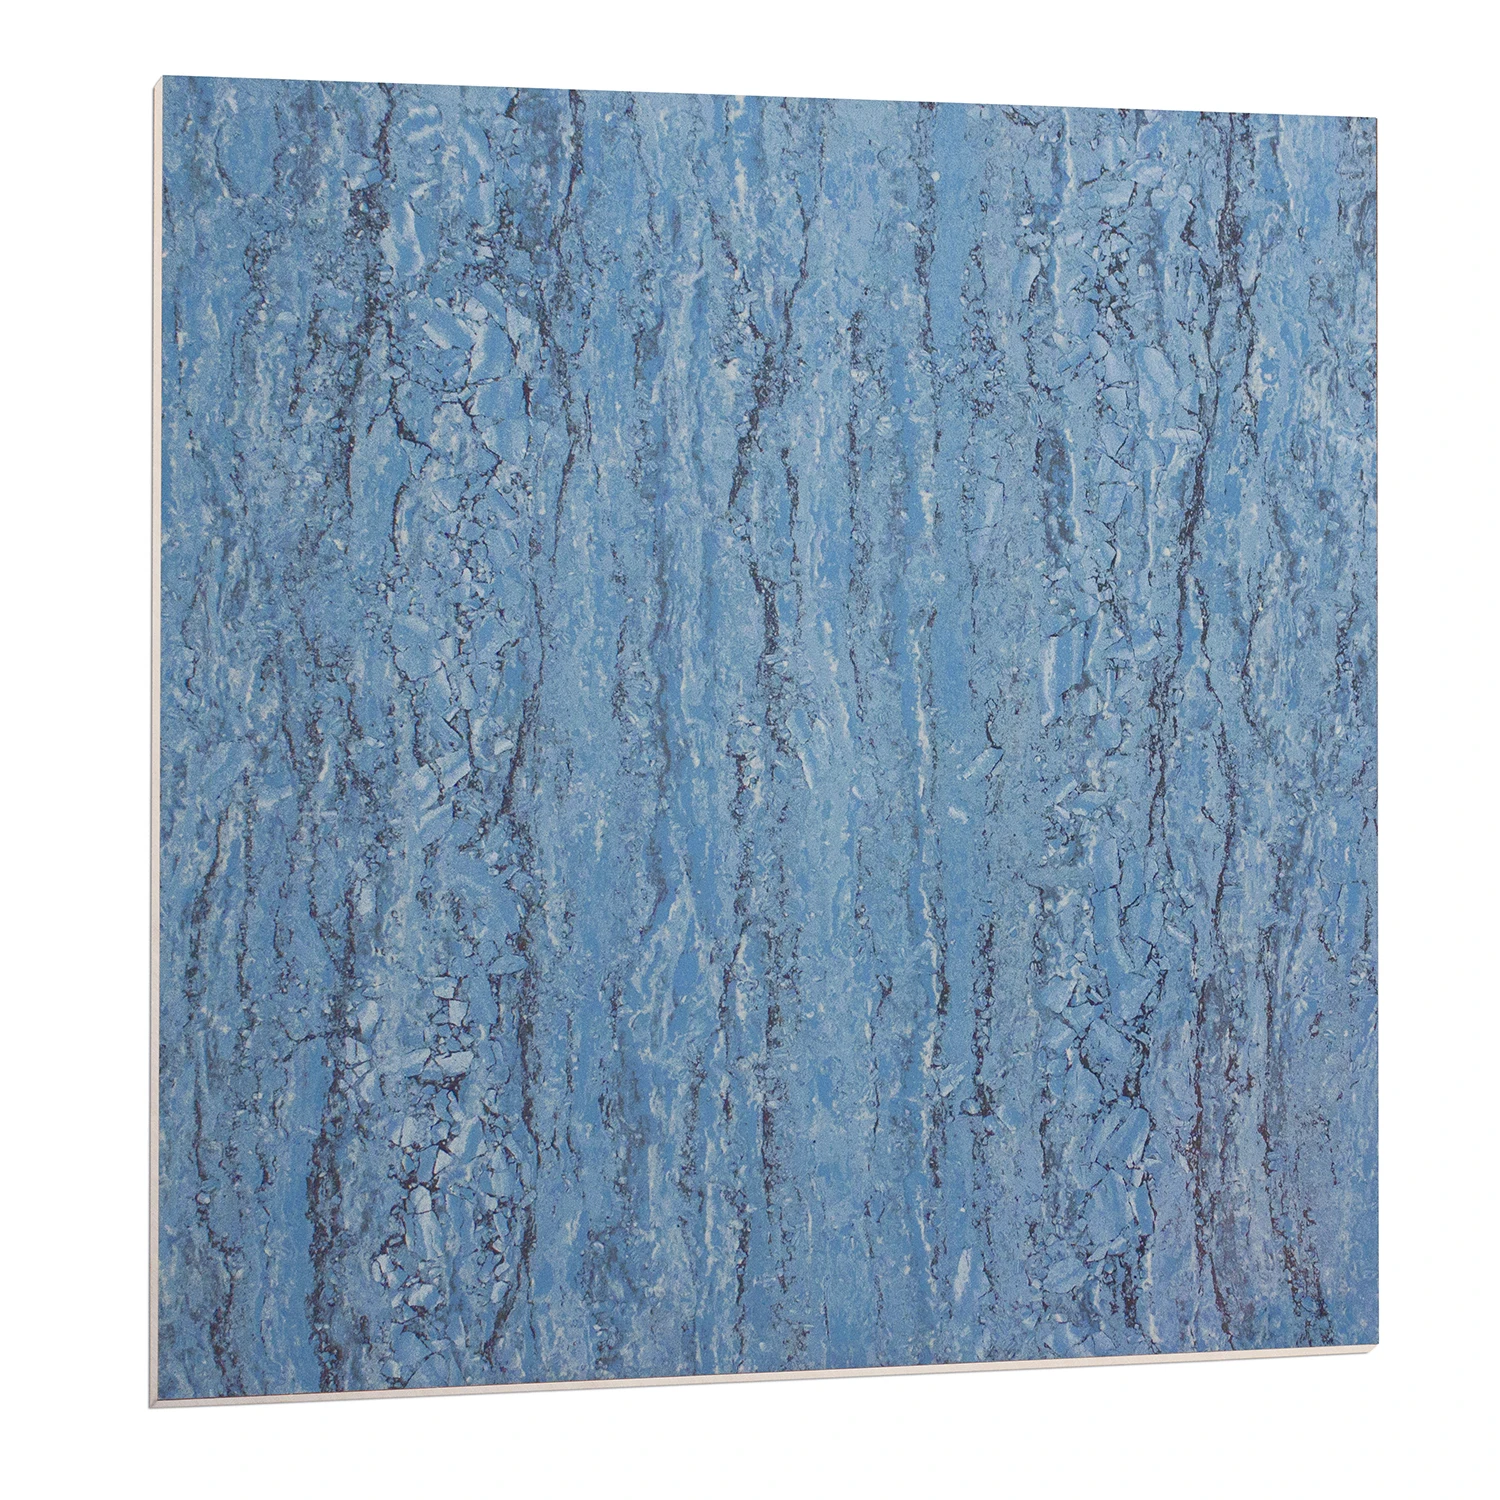 Van Gogh  Blue Stone Glossy Marble Porcelain Artist Tile 800x800